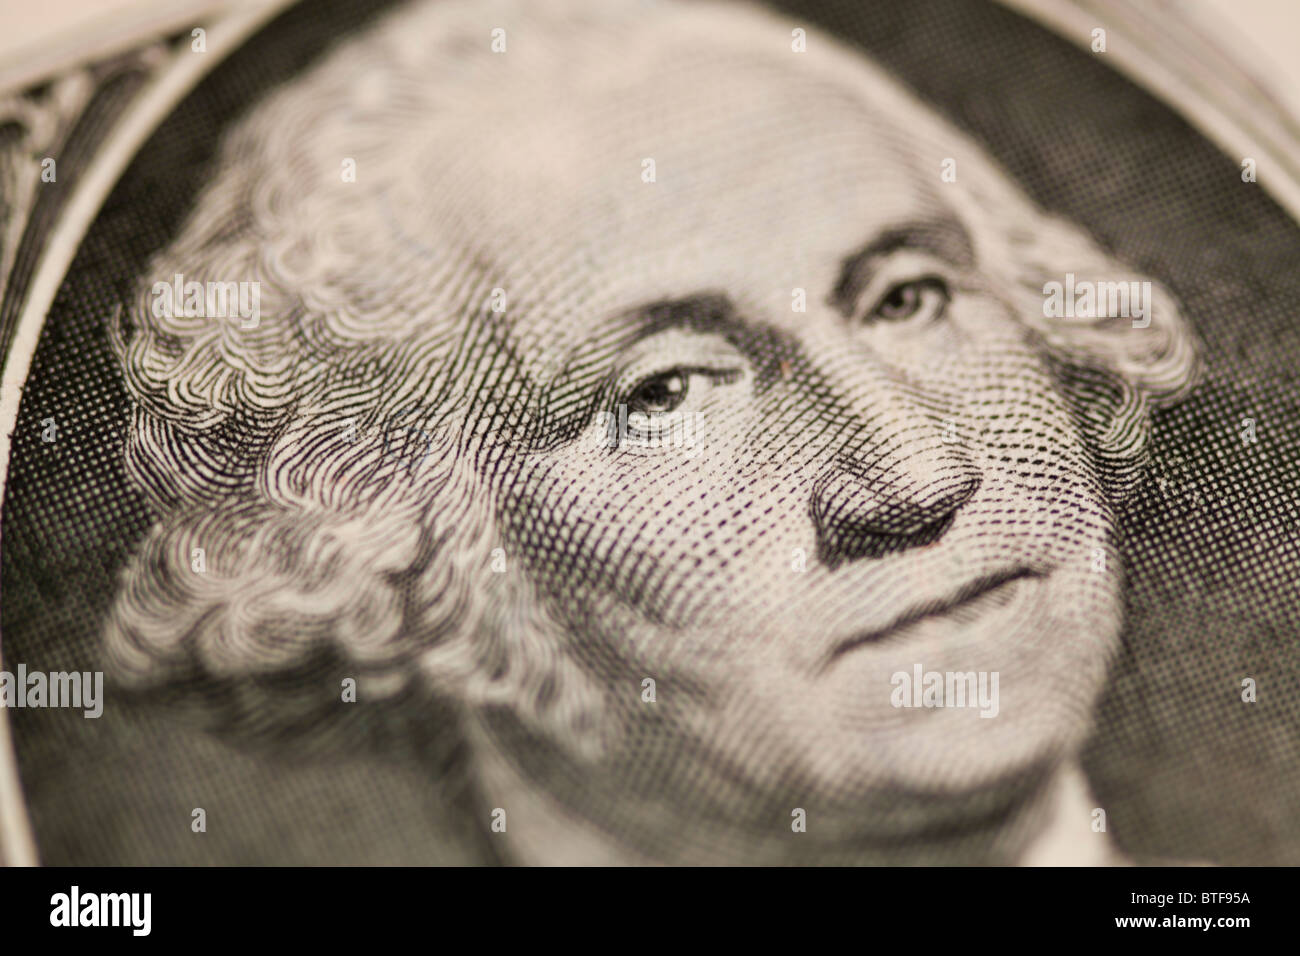 Close up of George Washington on one dollar bill Stock Photo